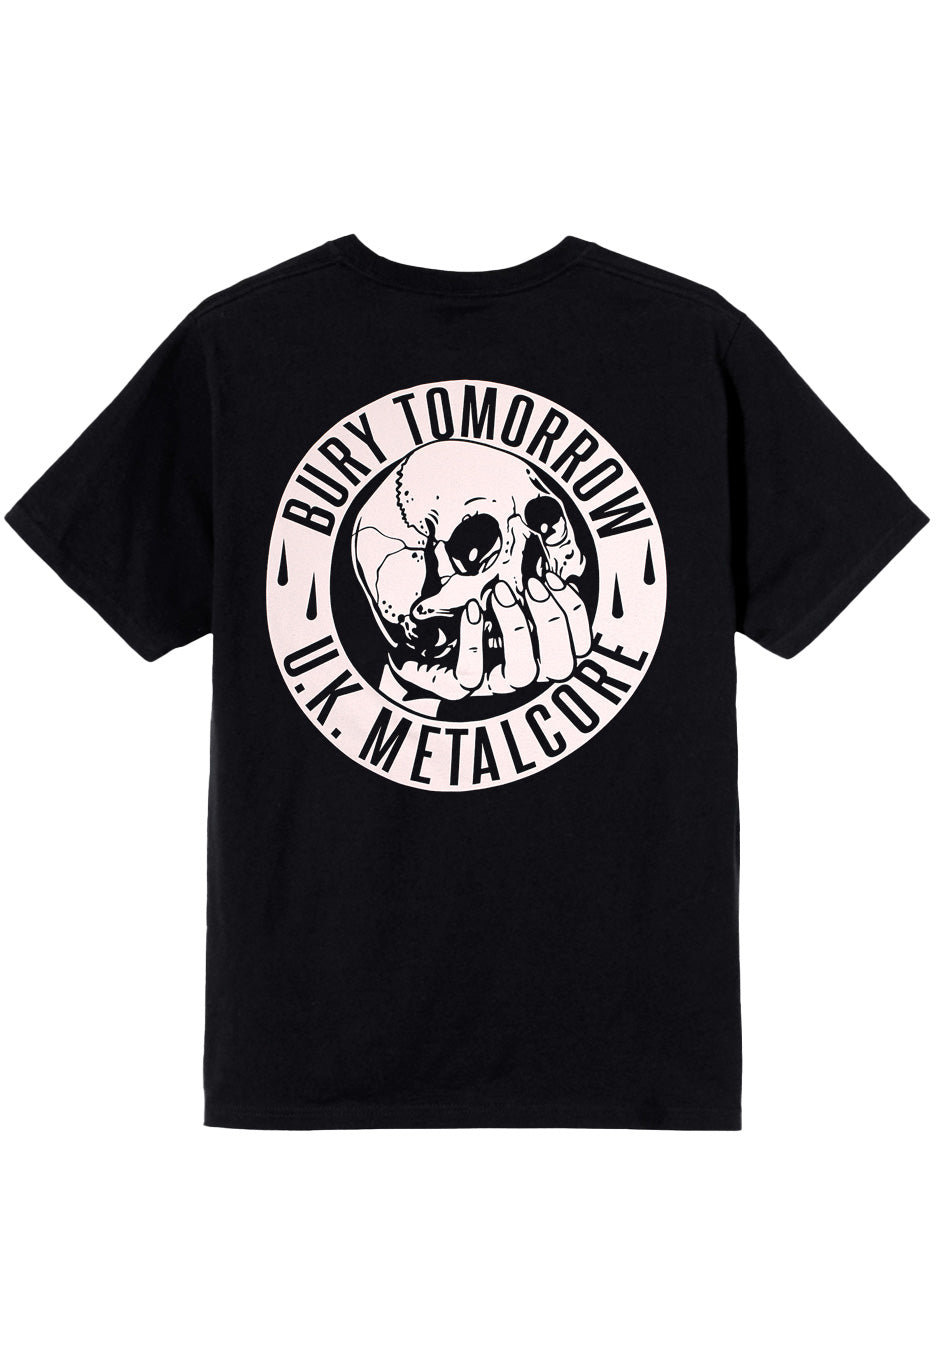 Bury Tomorrow - Skull Hand - T-Shirt